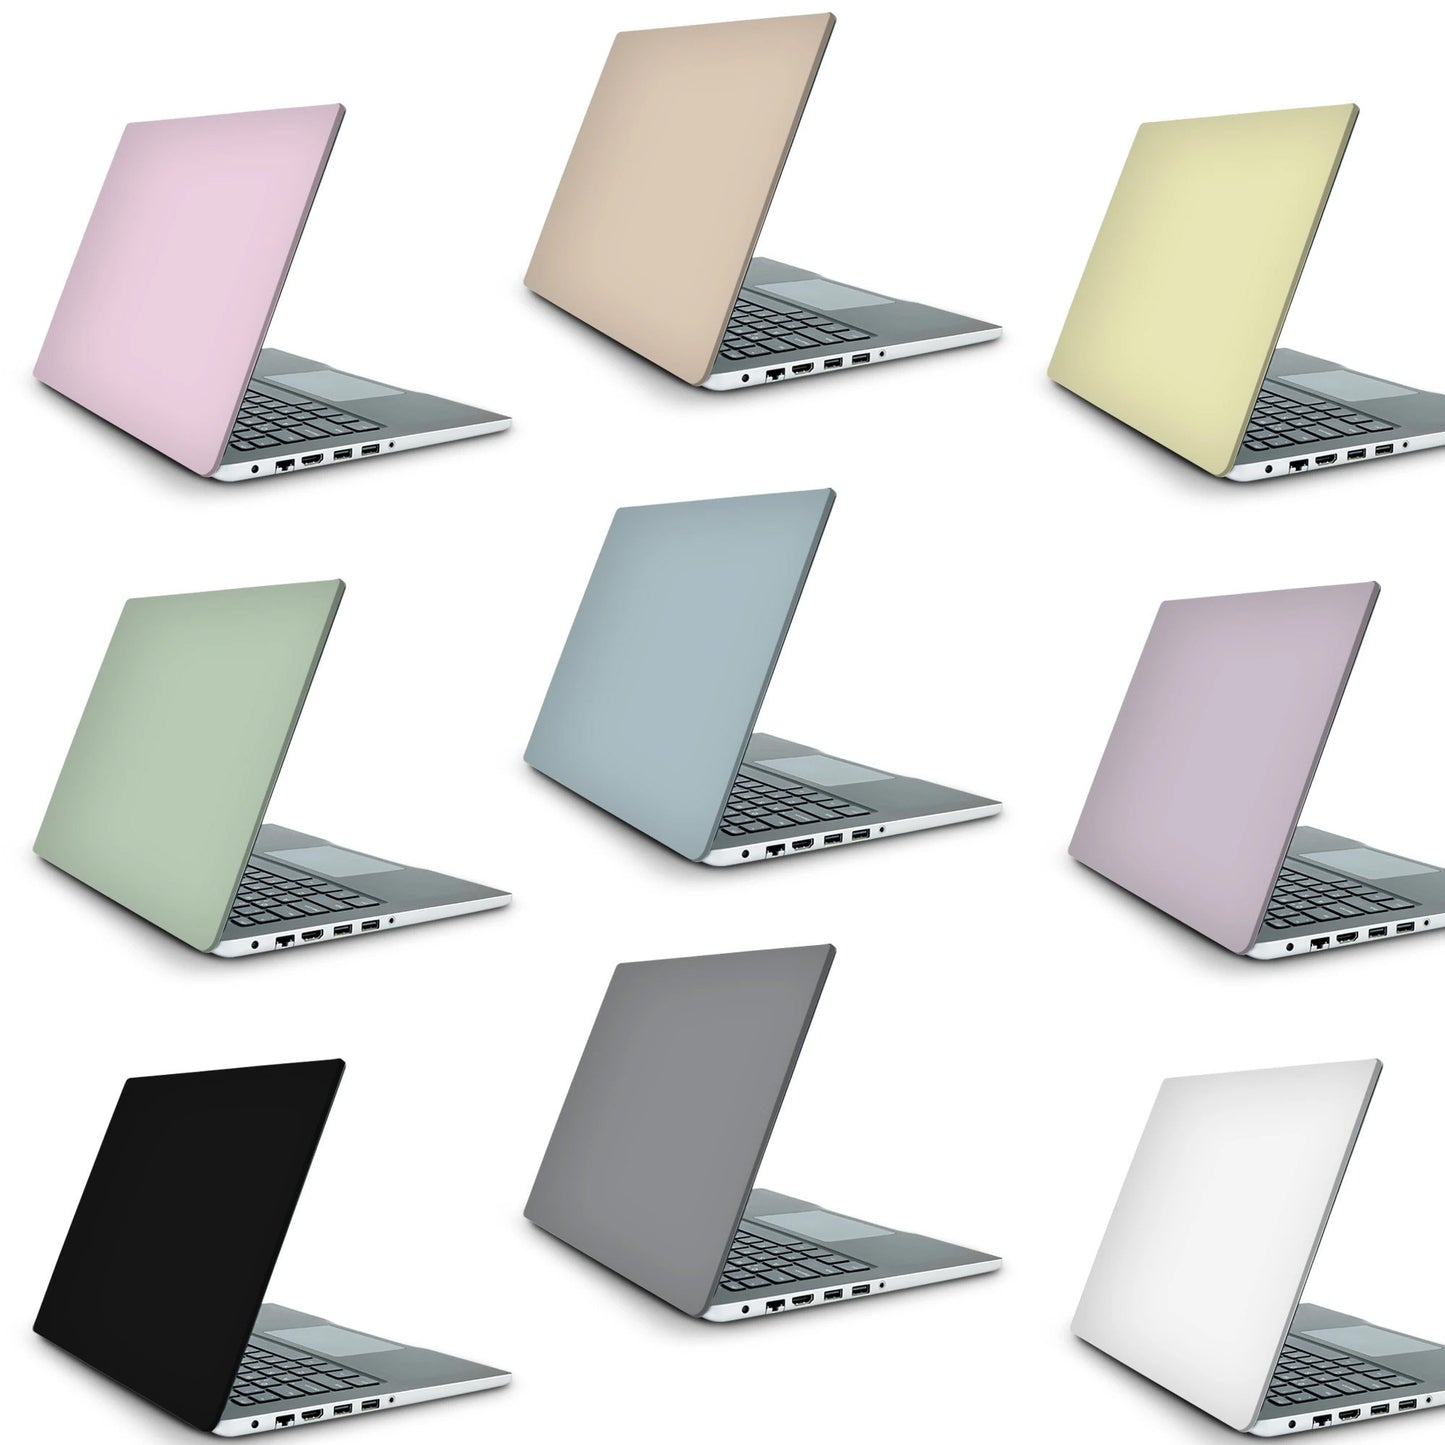 Abstract Mountain Laptop Skin, Laptop Cover, Laptop Skins, Removable Laptop Skins, Laptop Decal, Customized Laptop Skin, Laptop Stickers 370